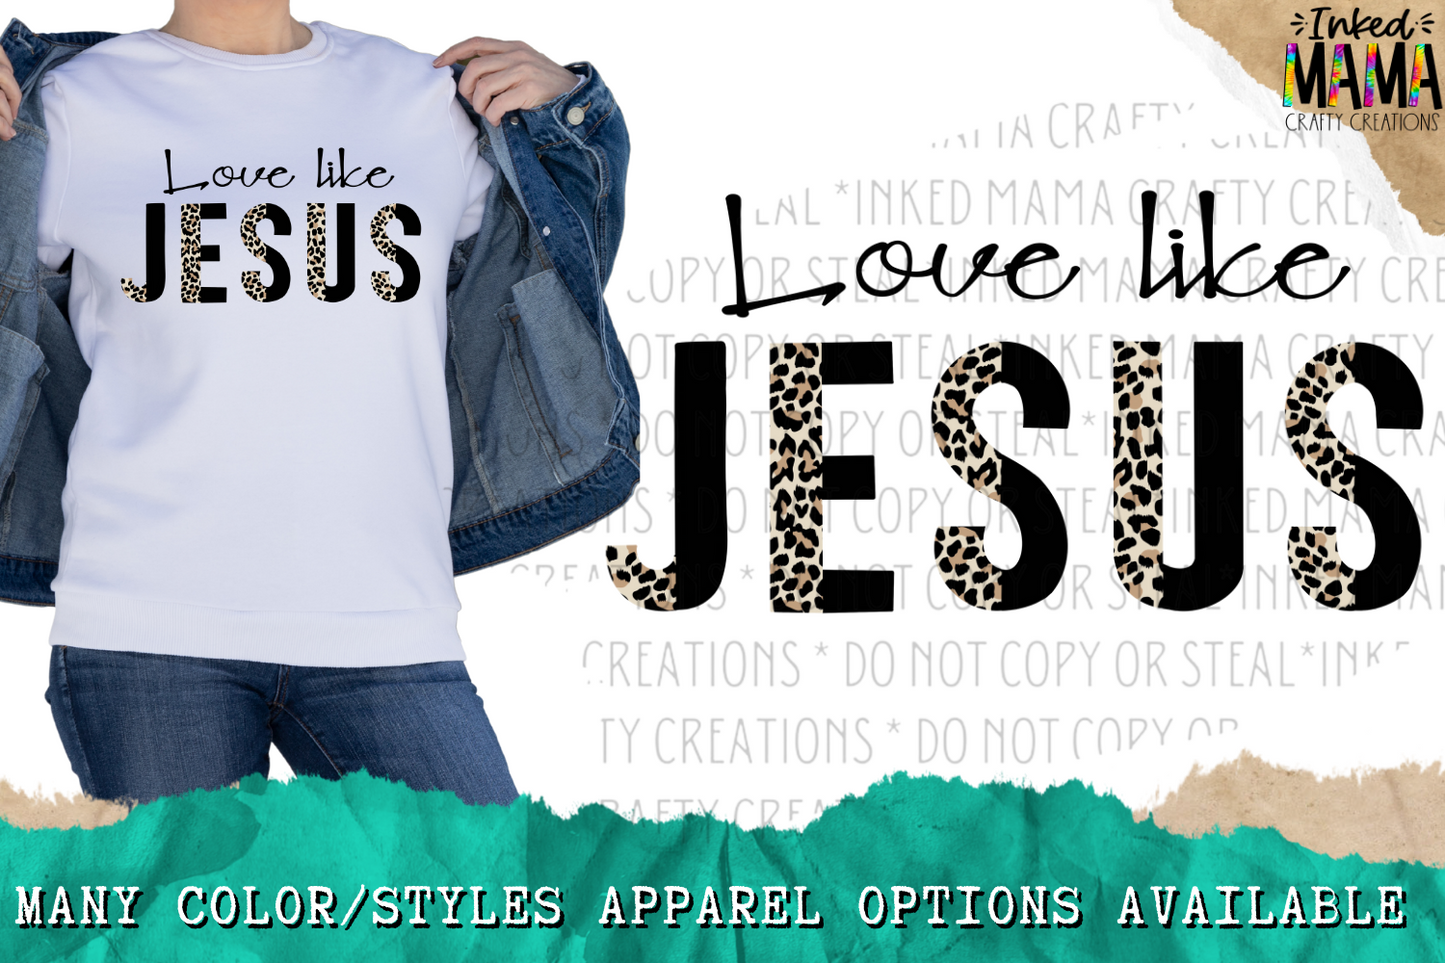 Love like Jesus - Leopard Print -  Easter Faith based - Apparel